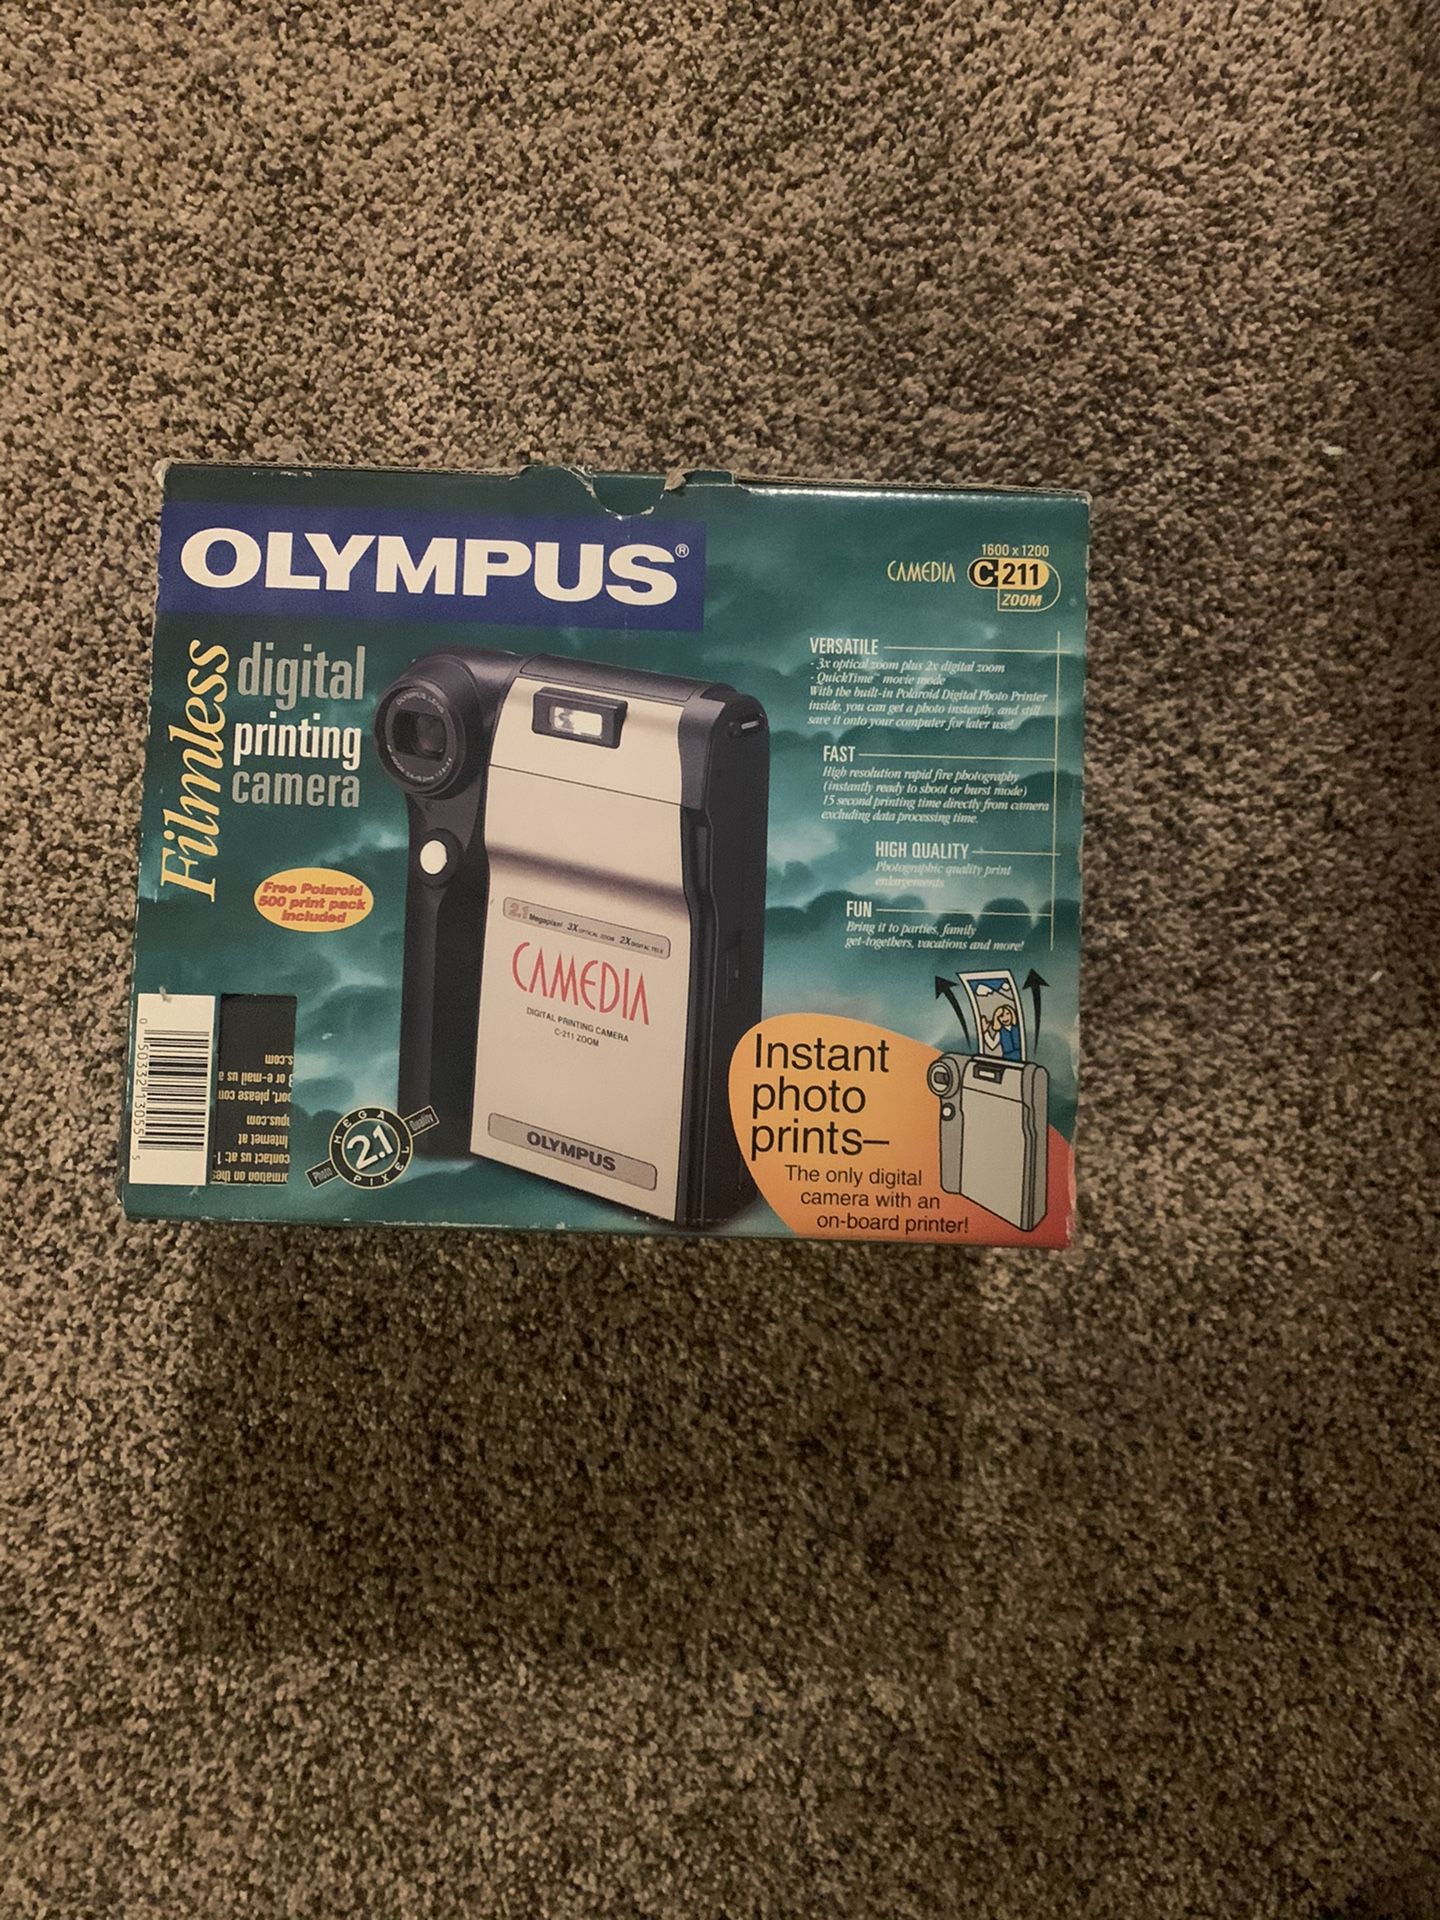 Olympus digital printing camera